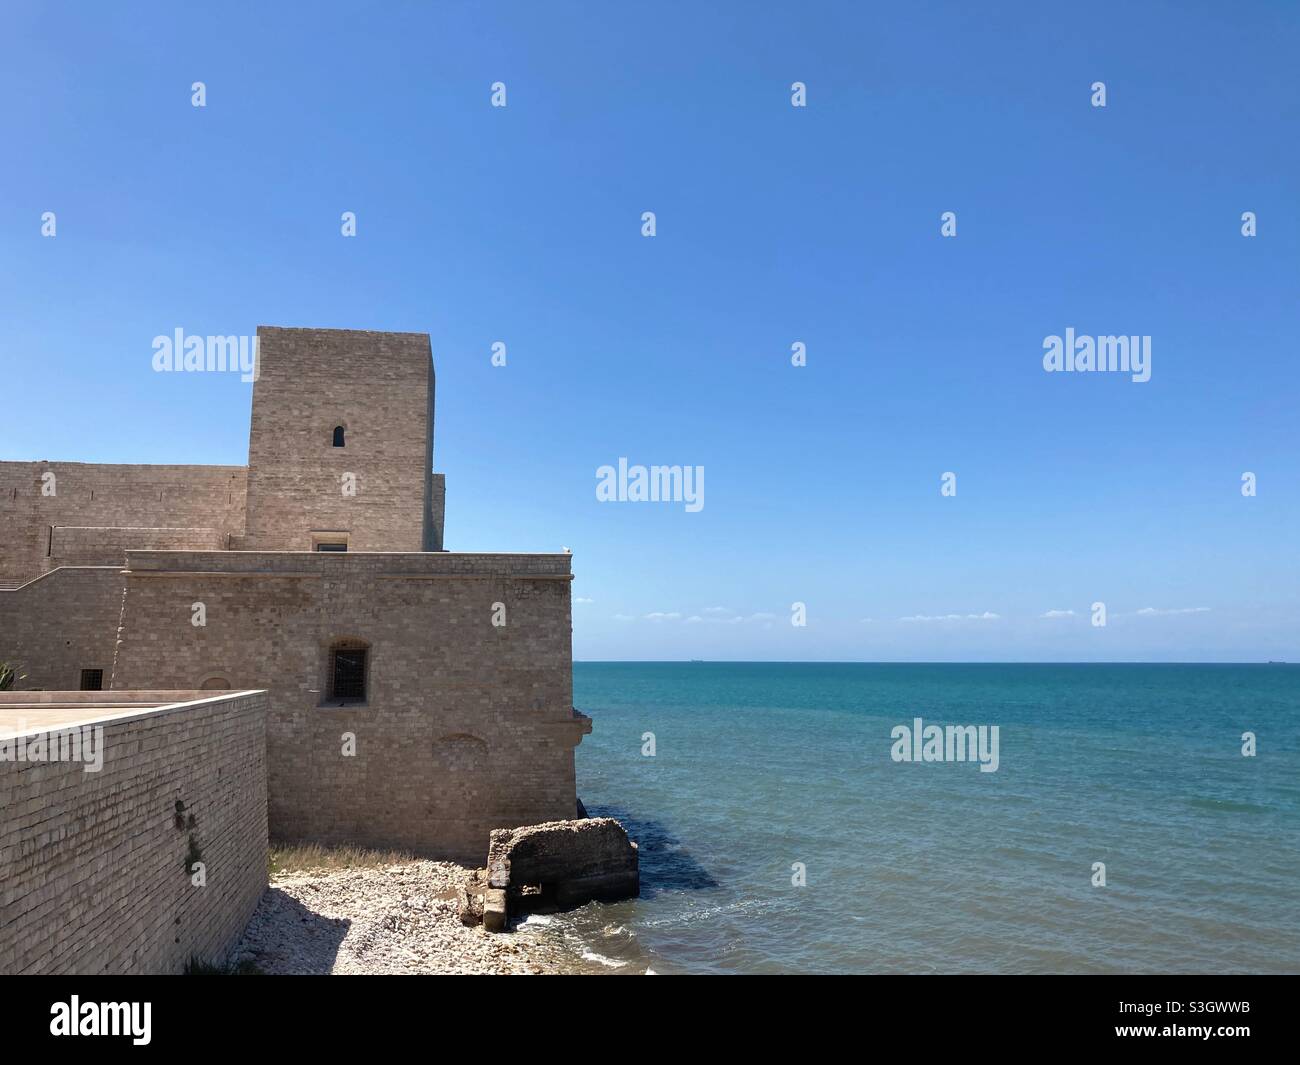 Le Castello svevo di Trani à côté de la mer Adriatique, Trani, Puglia, Italie Banque D'Images